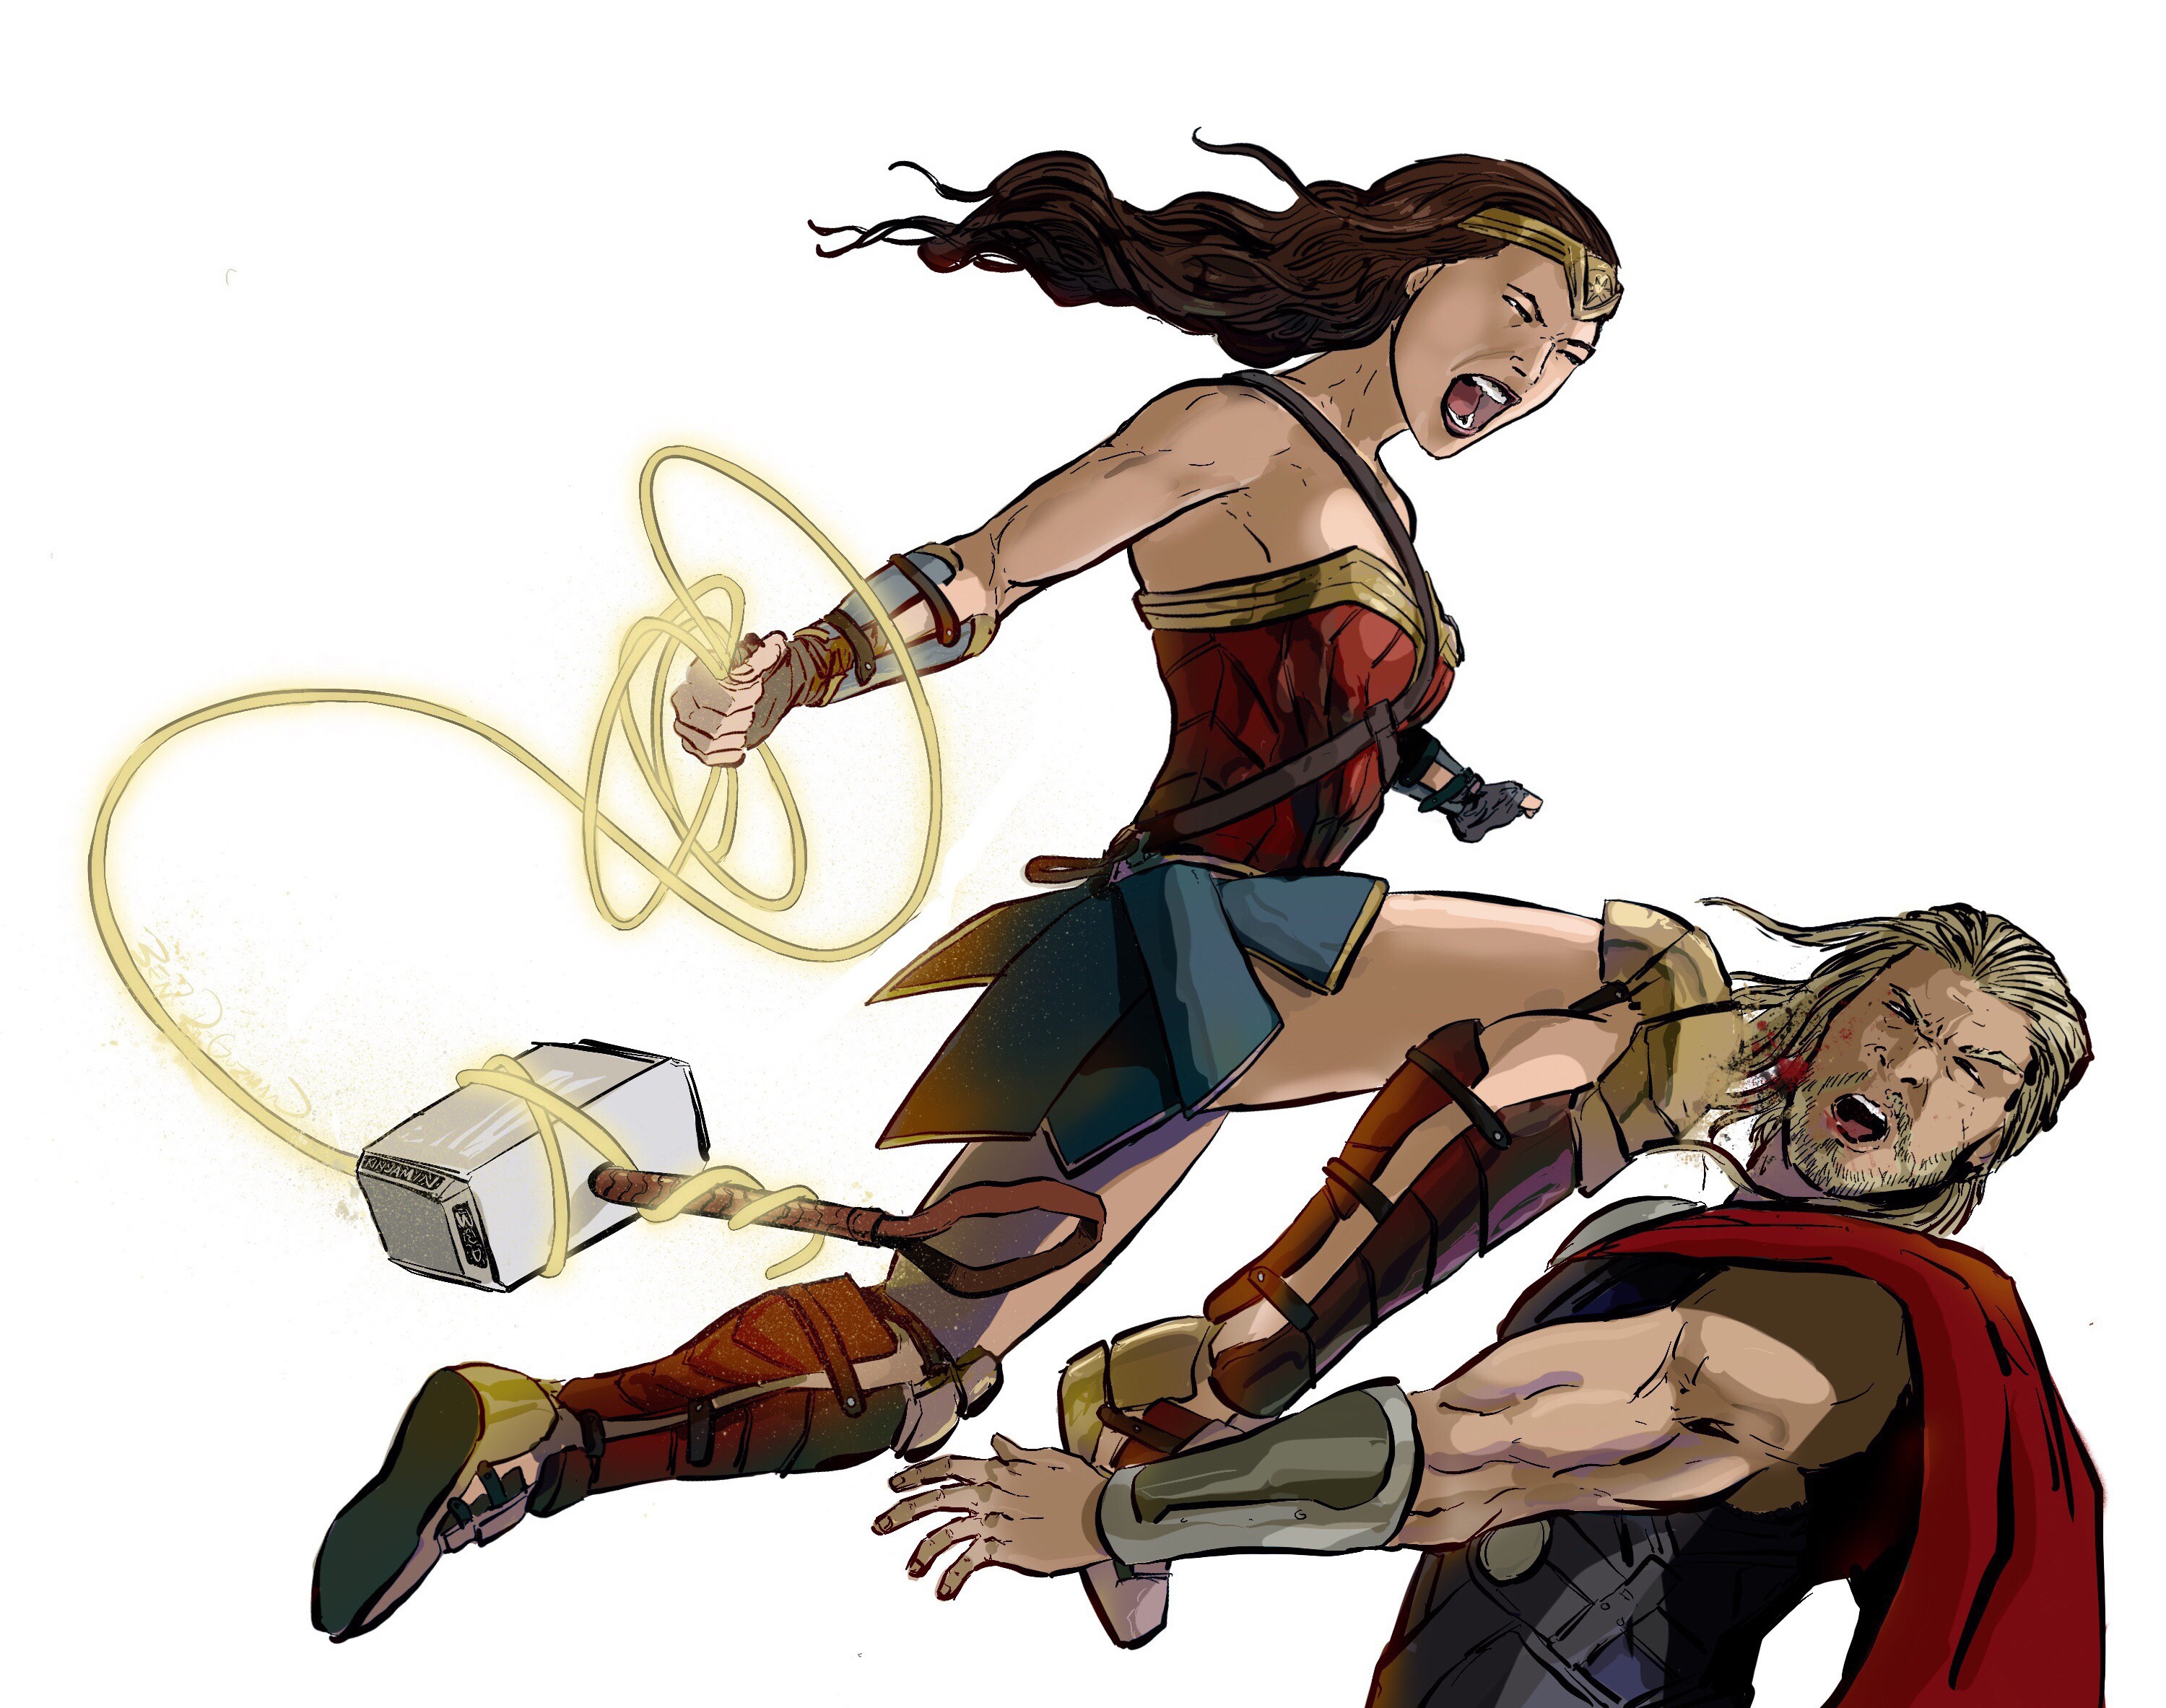 Descarga gratuita de fondo de pantalla para móvil de Transversal, Historietas, Dc Comics, La Mujer Maravilla, Thor.